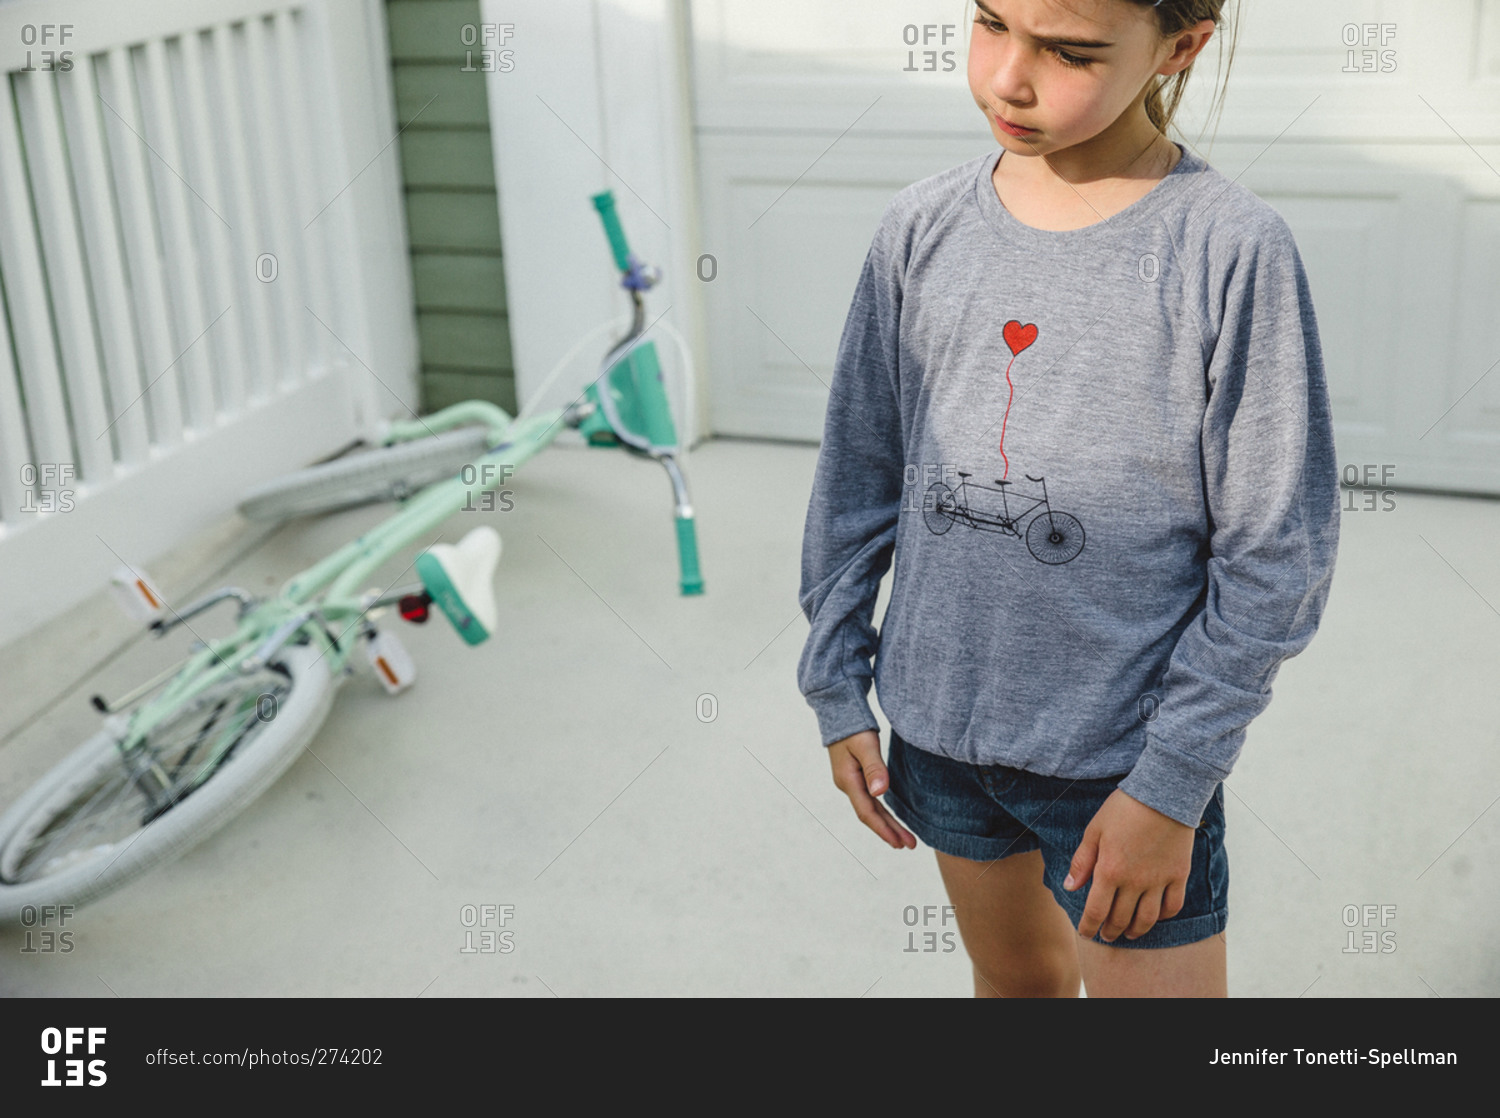 Sad looking girl standing next to her bike